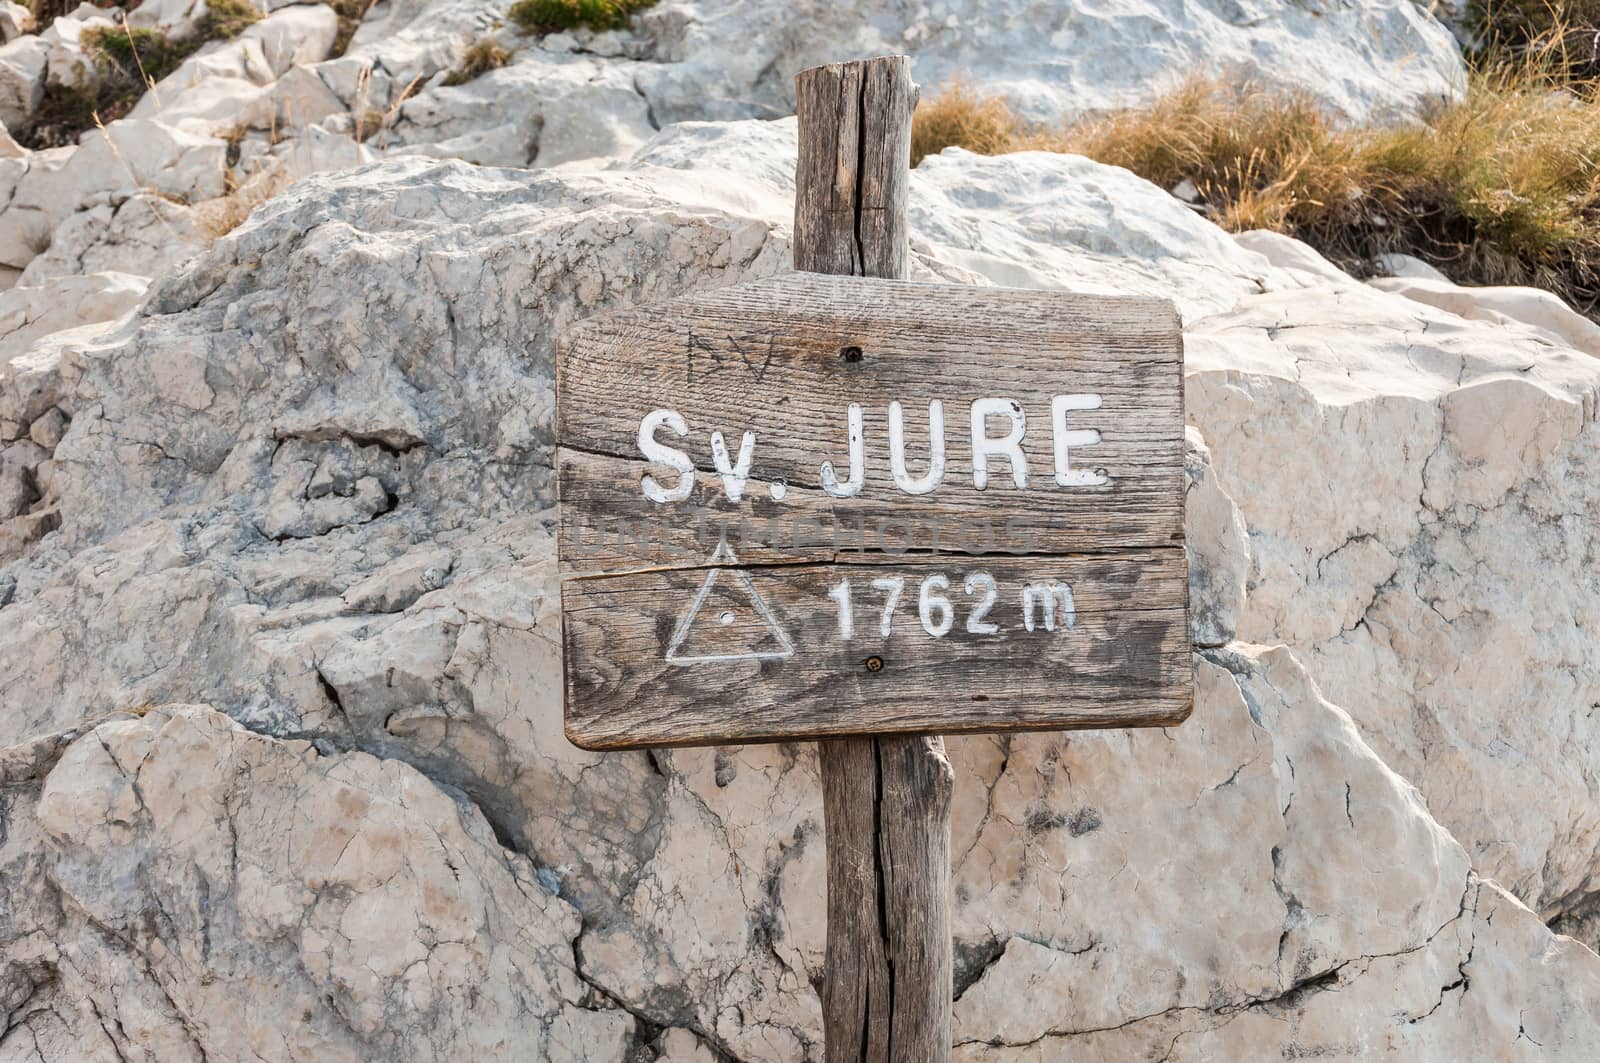 Sv. Jure peak sign in Biokovo mountains, Croatia.